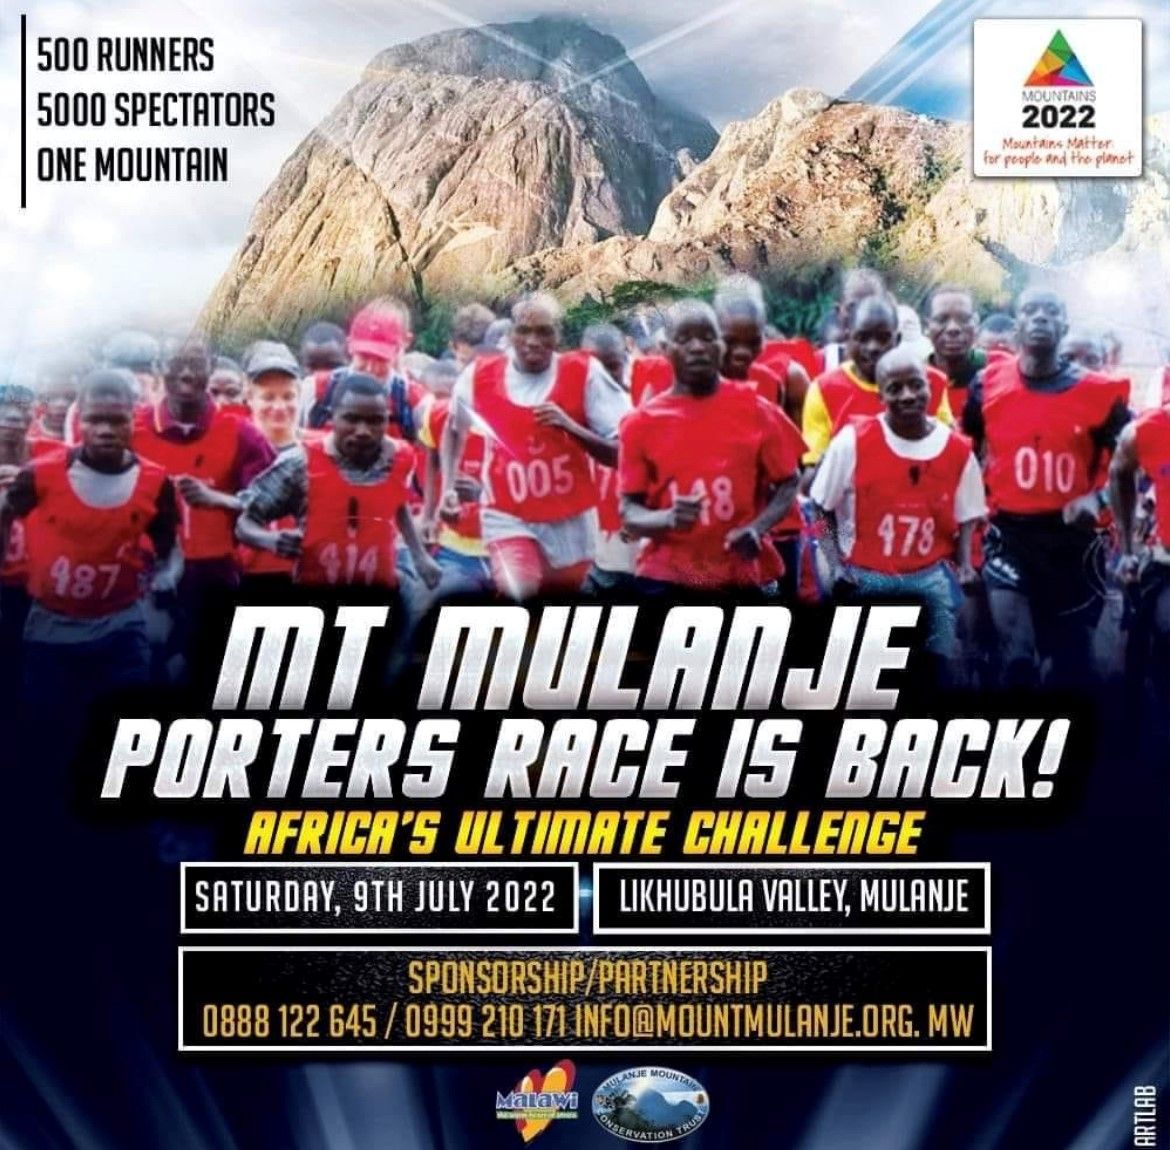 The 24TH Mount Mulanje Porters Race - July 9, 2022